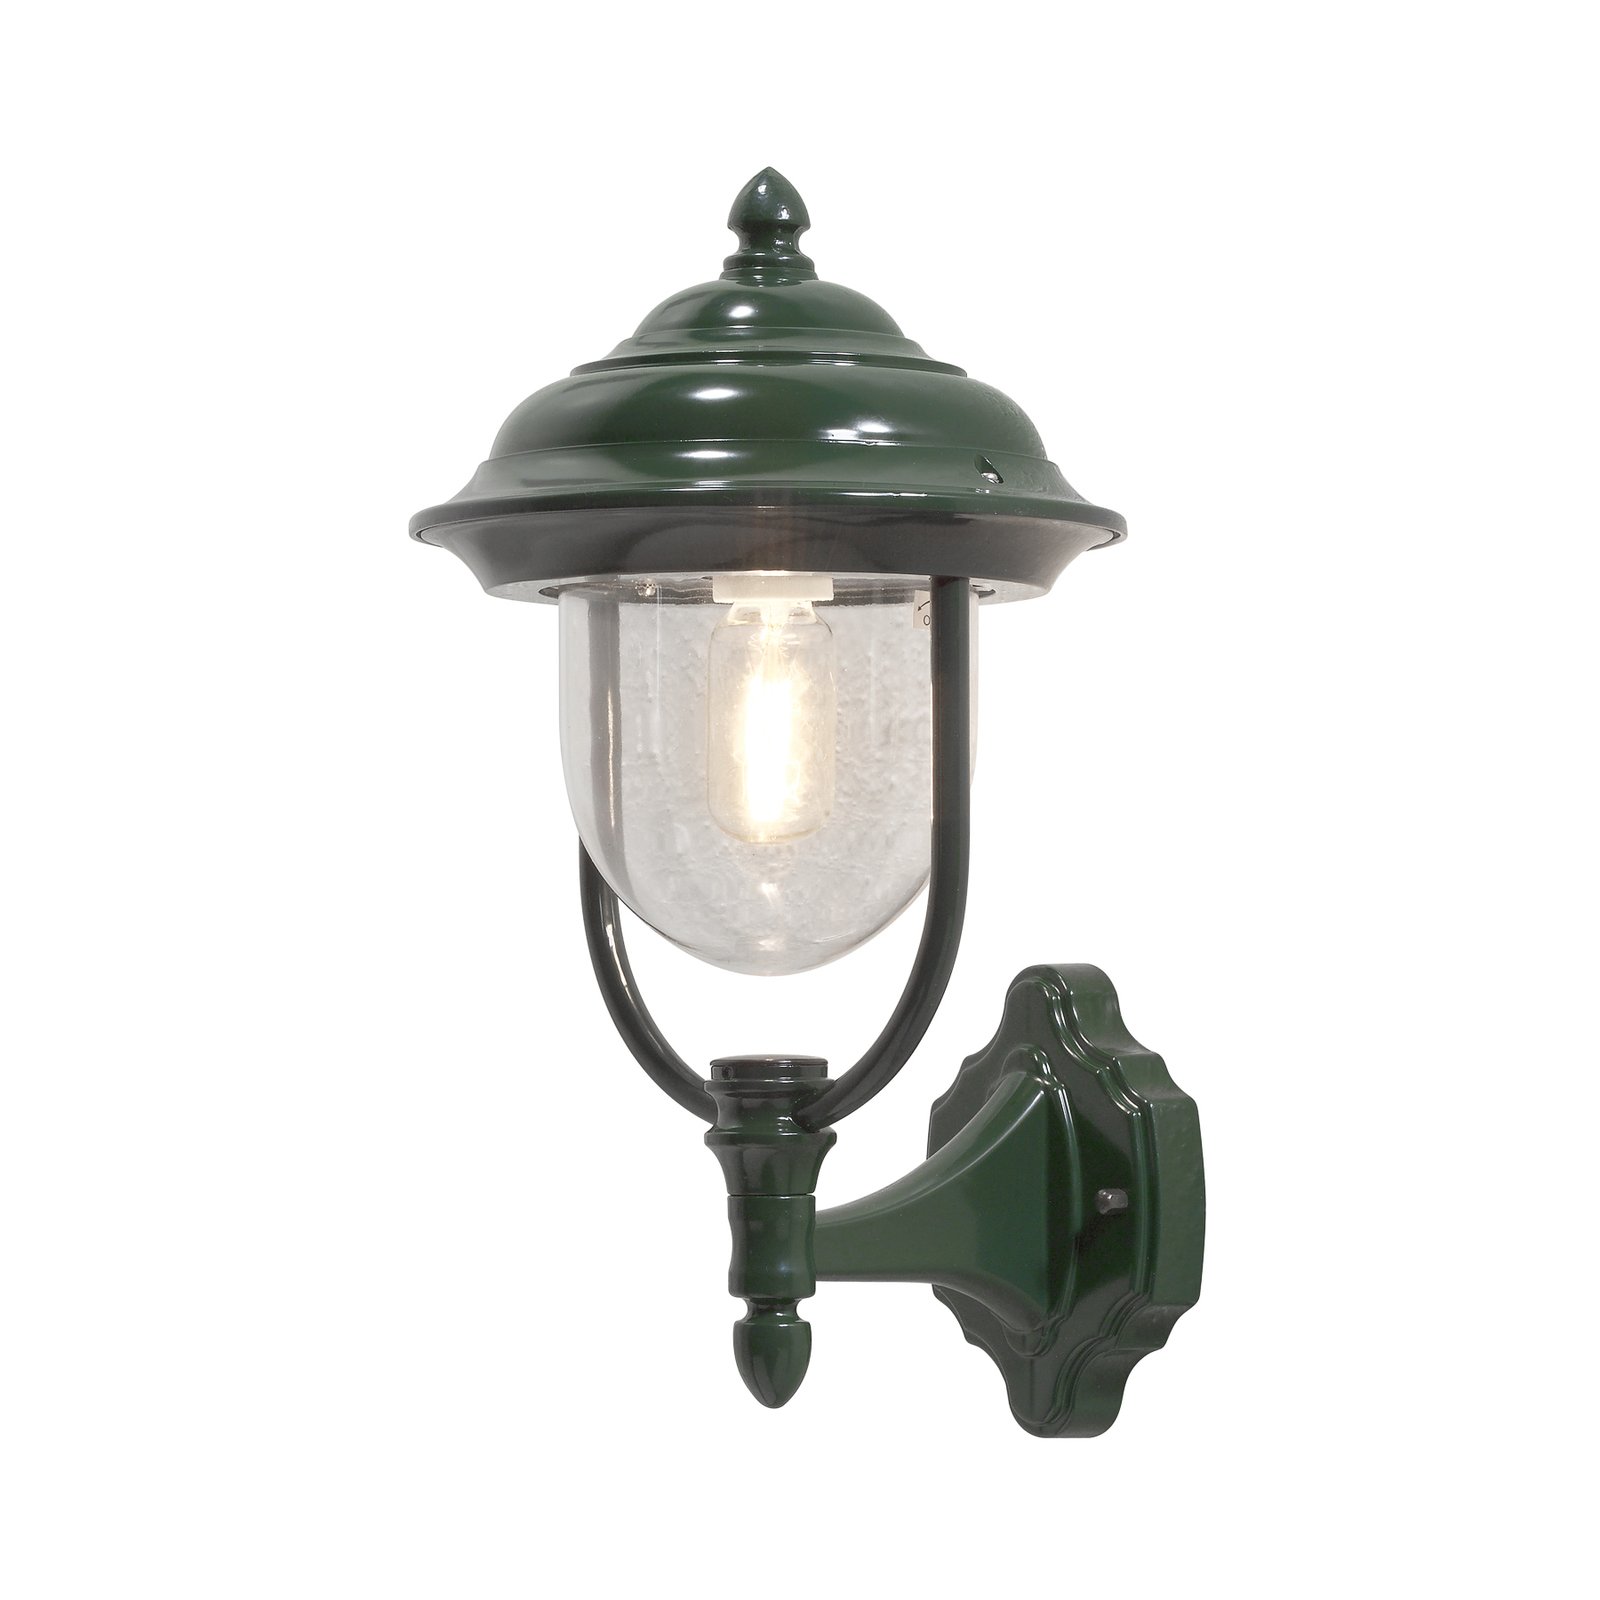 Parma outdoor wall light, standing lantern, green